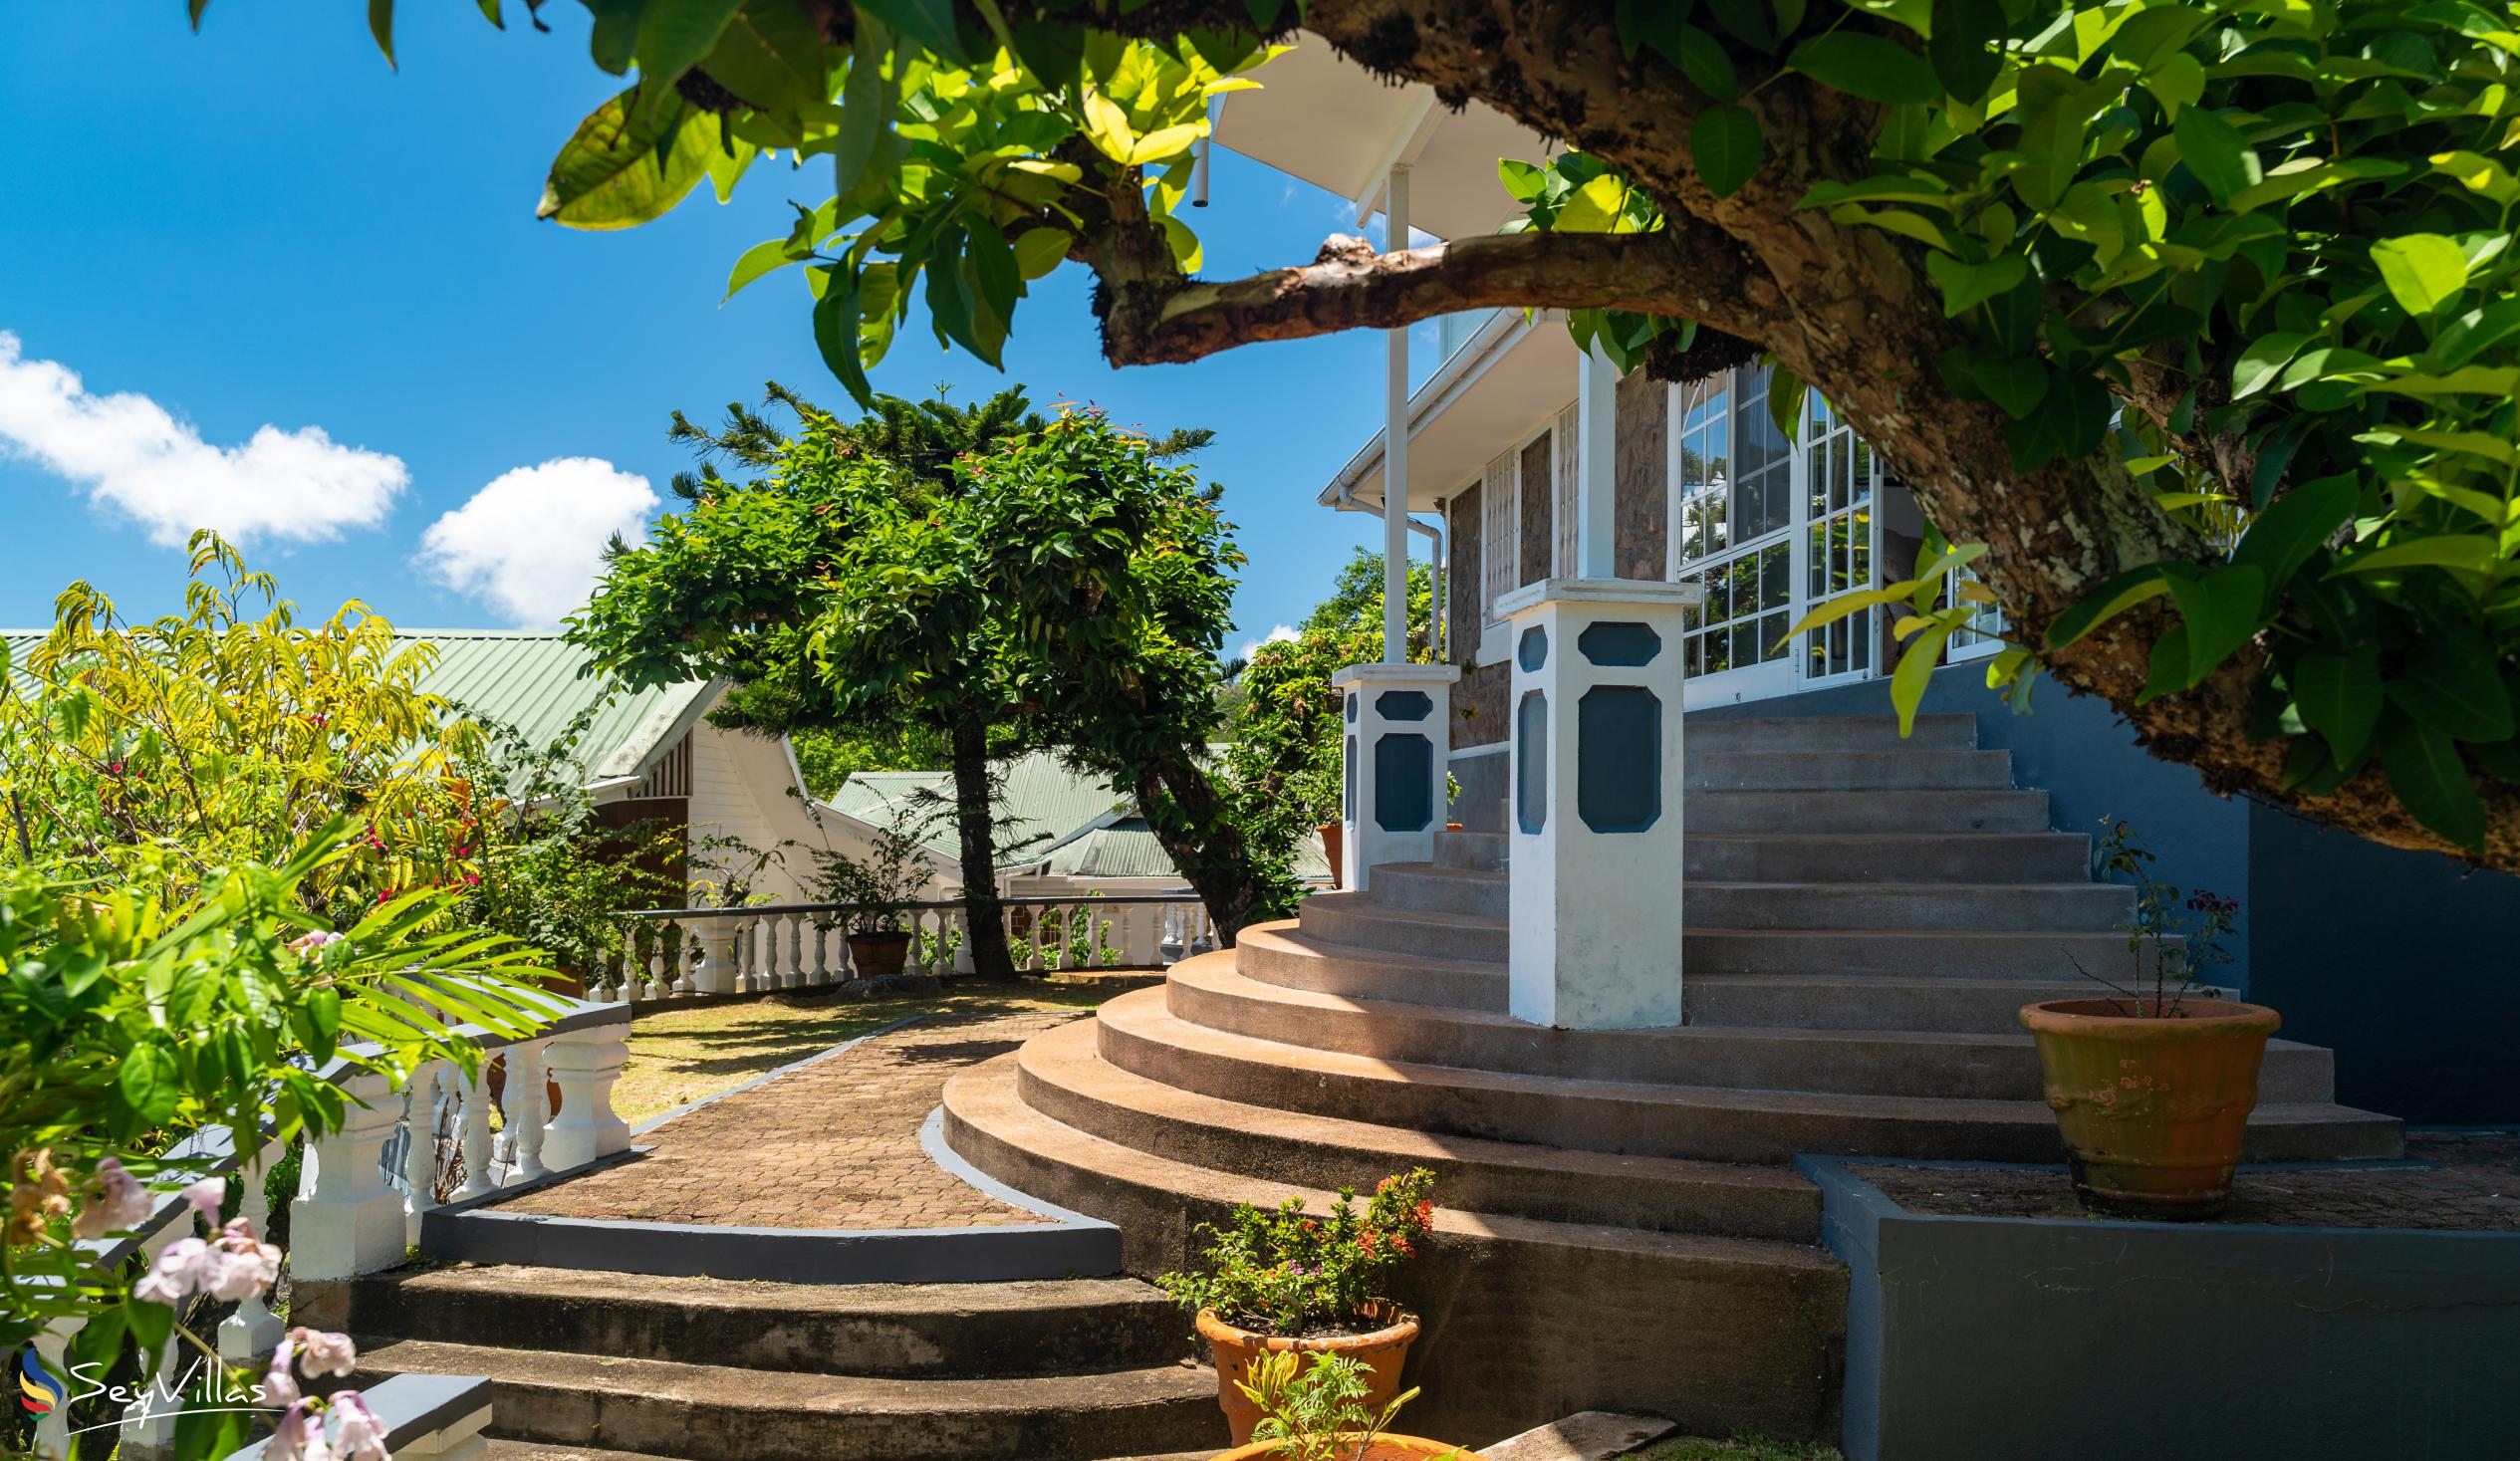 Photo 13: Beau Sejour Hotel - Outdoor area - Mahé (Seychelles)